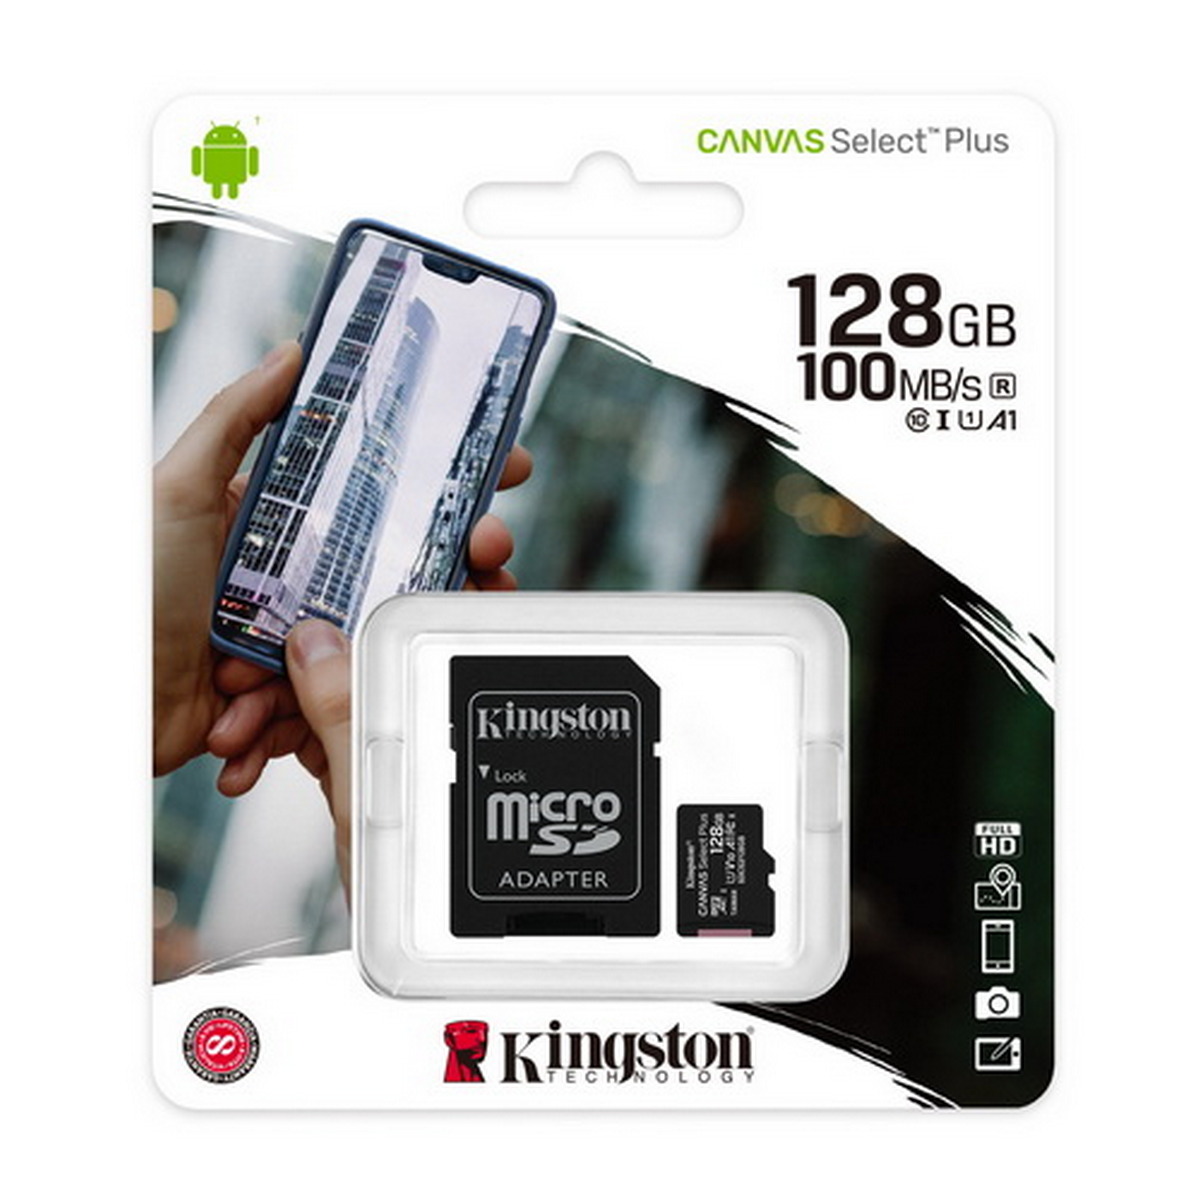 KINGSTON Micro SD Card (128GB) Canvas Select Plus